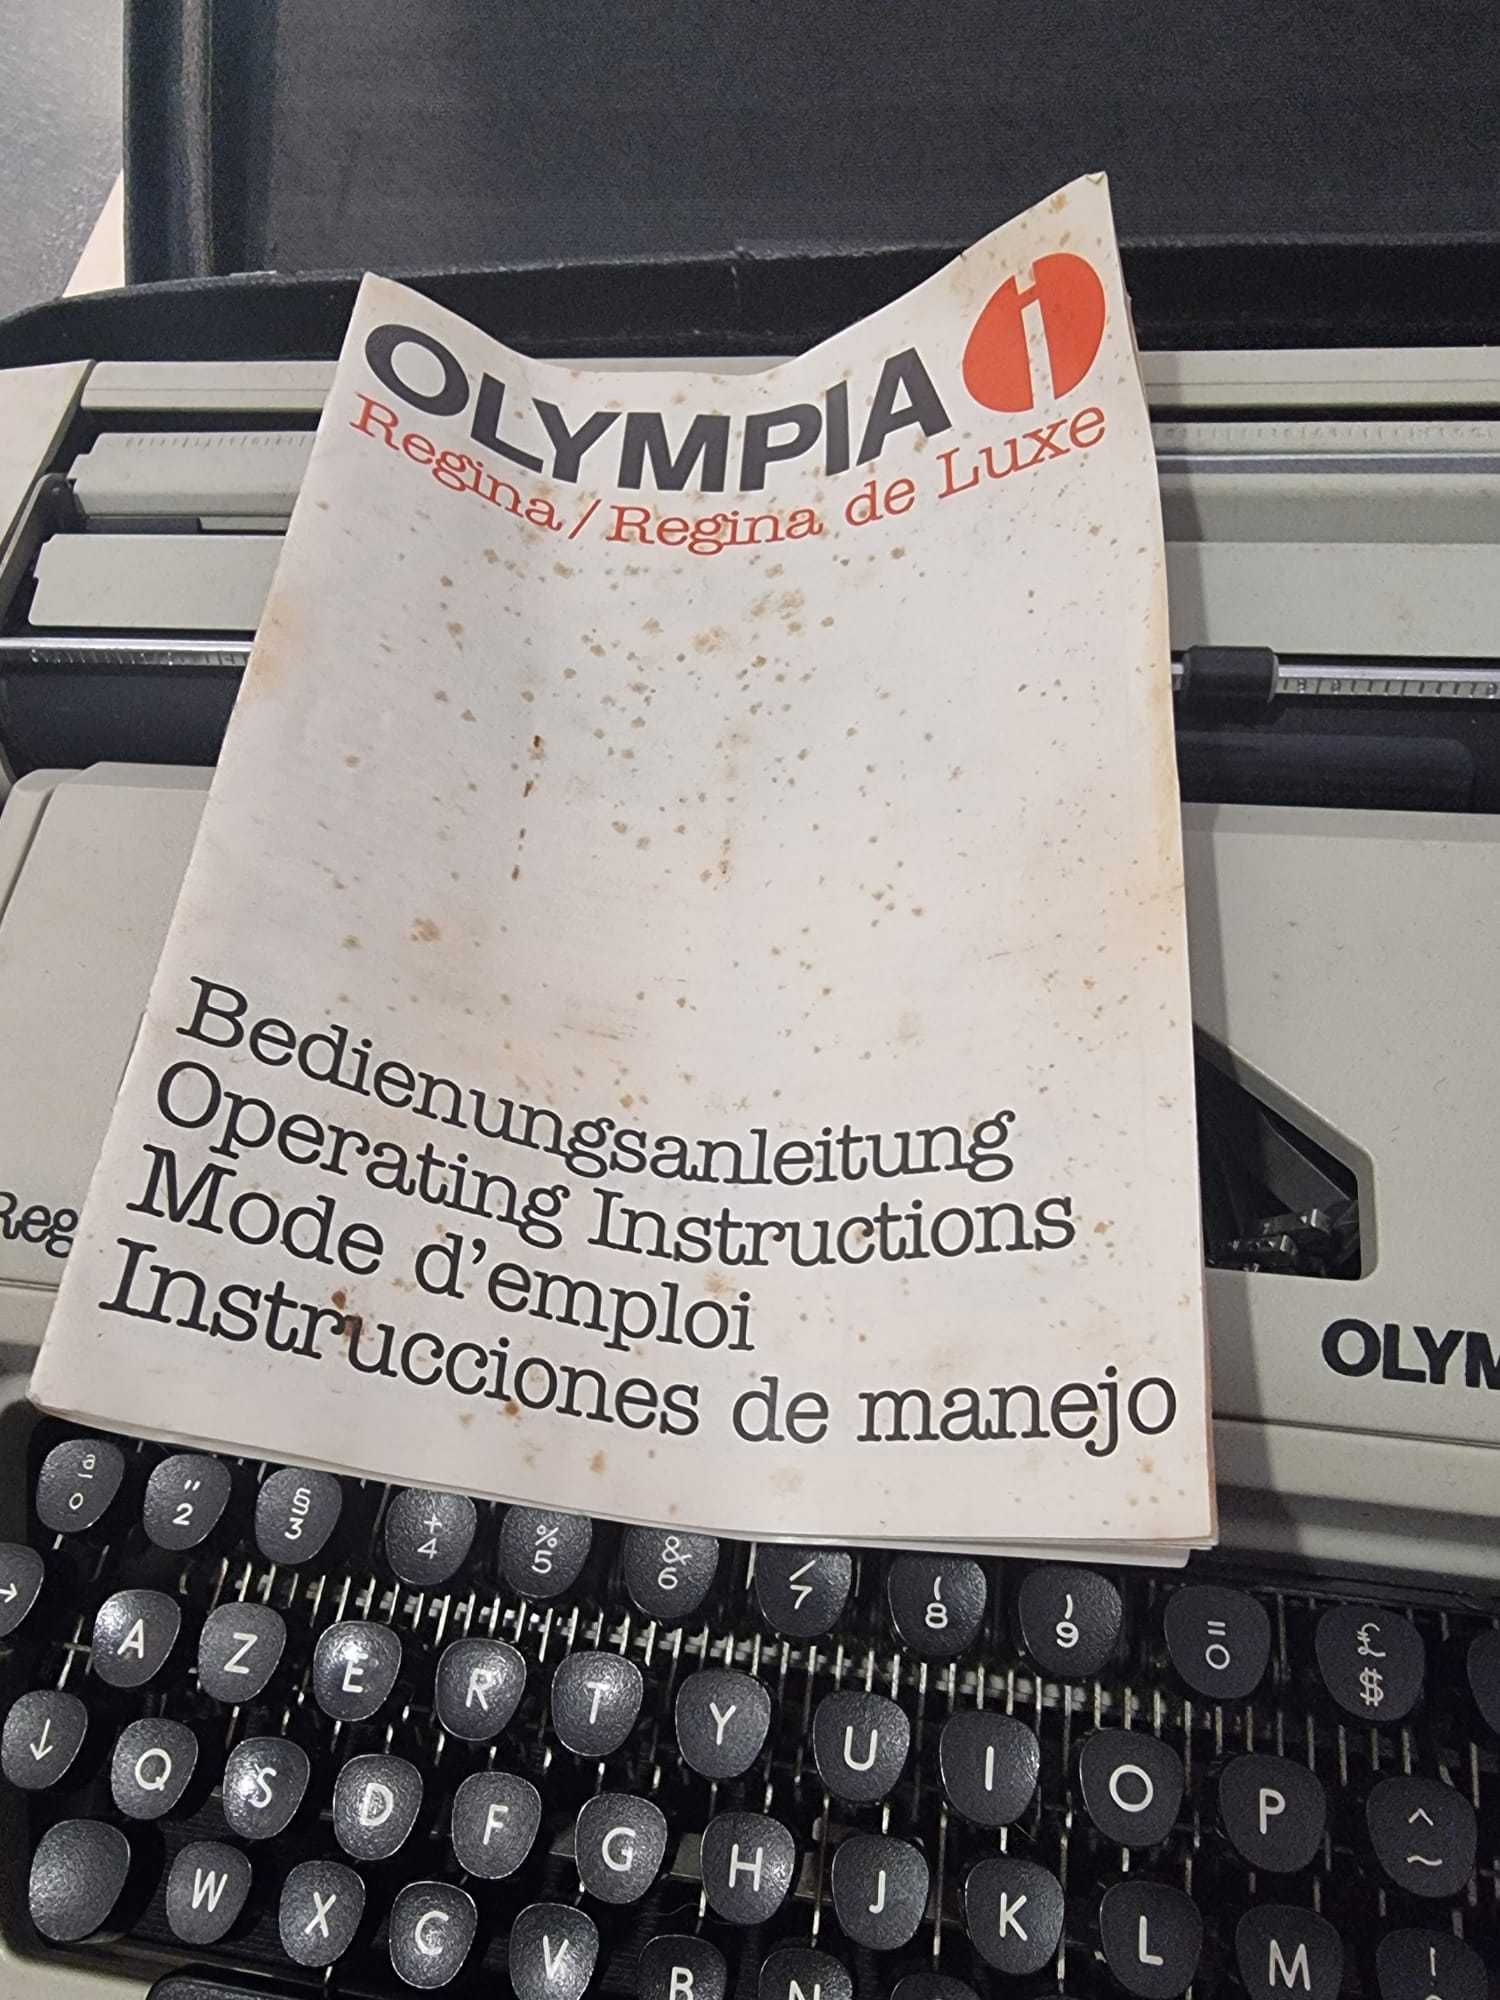 Máquina de Escrever Olympia Regina de Luxe